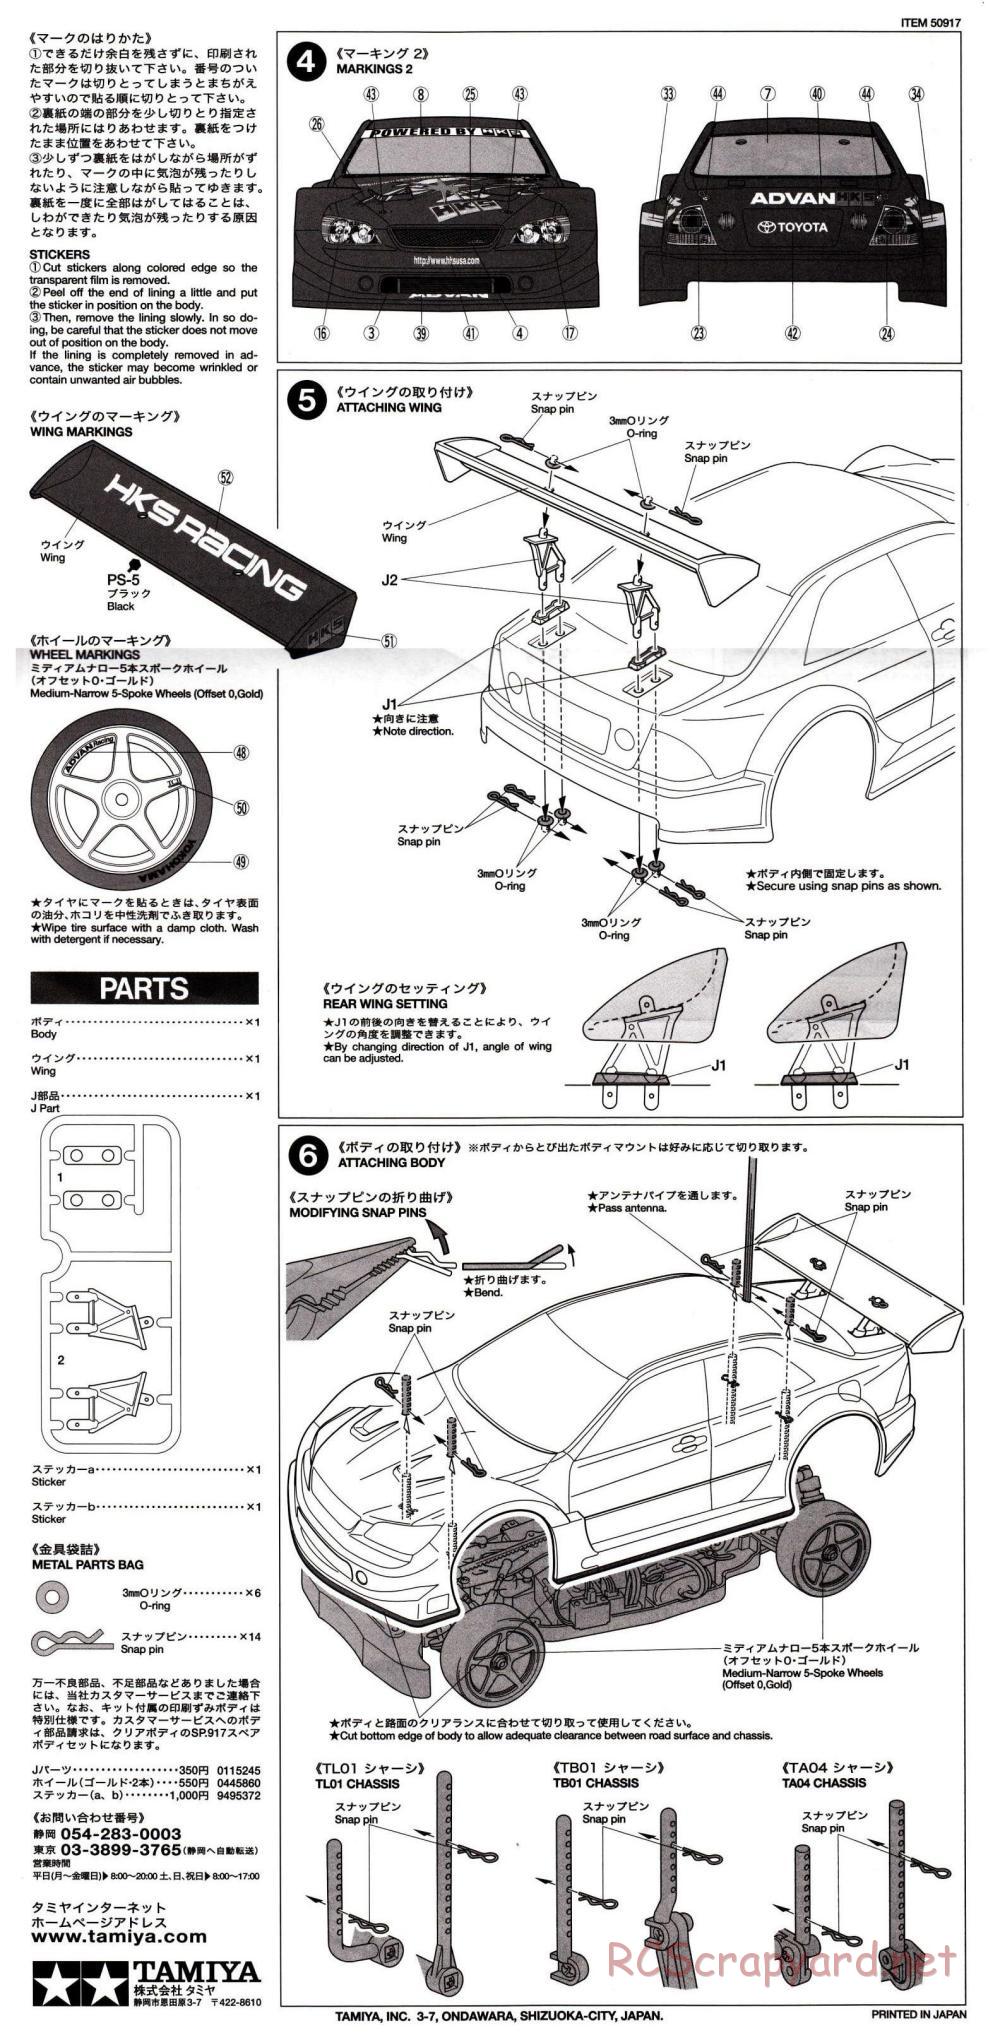 Tamiya - HKS Racing Altezza - TA-04R Chassis - Body Manual - Page 2